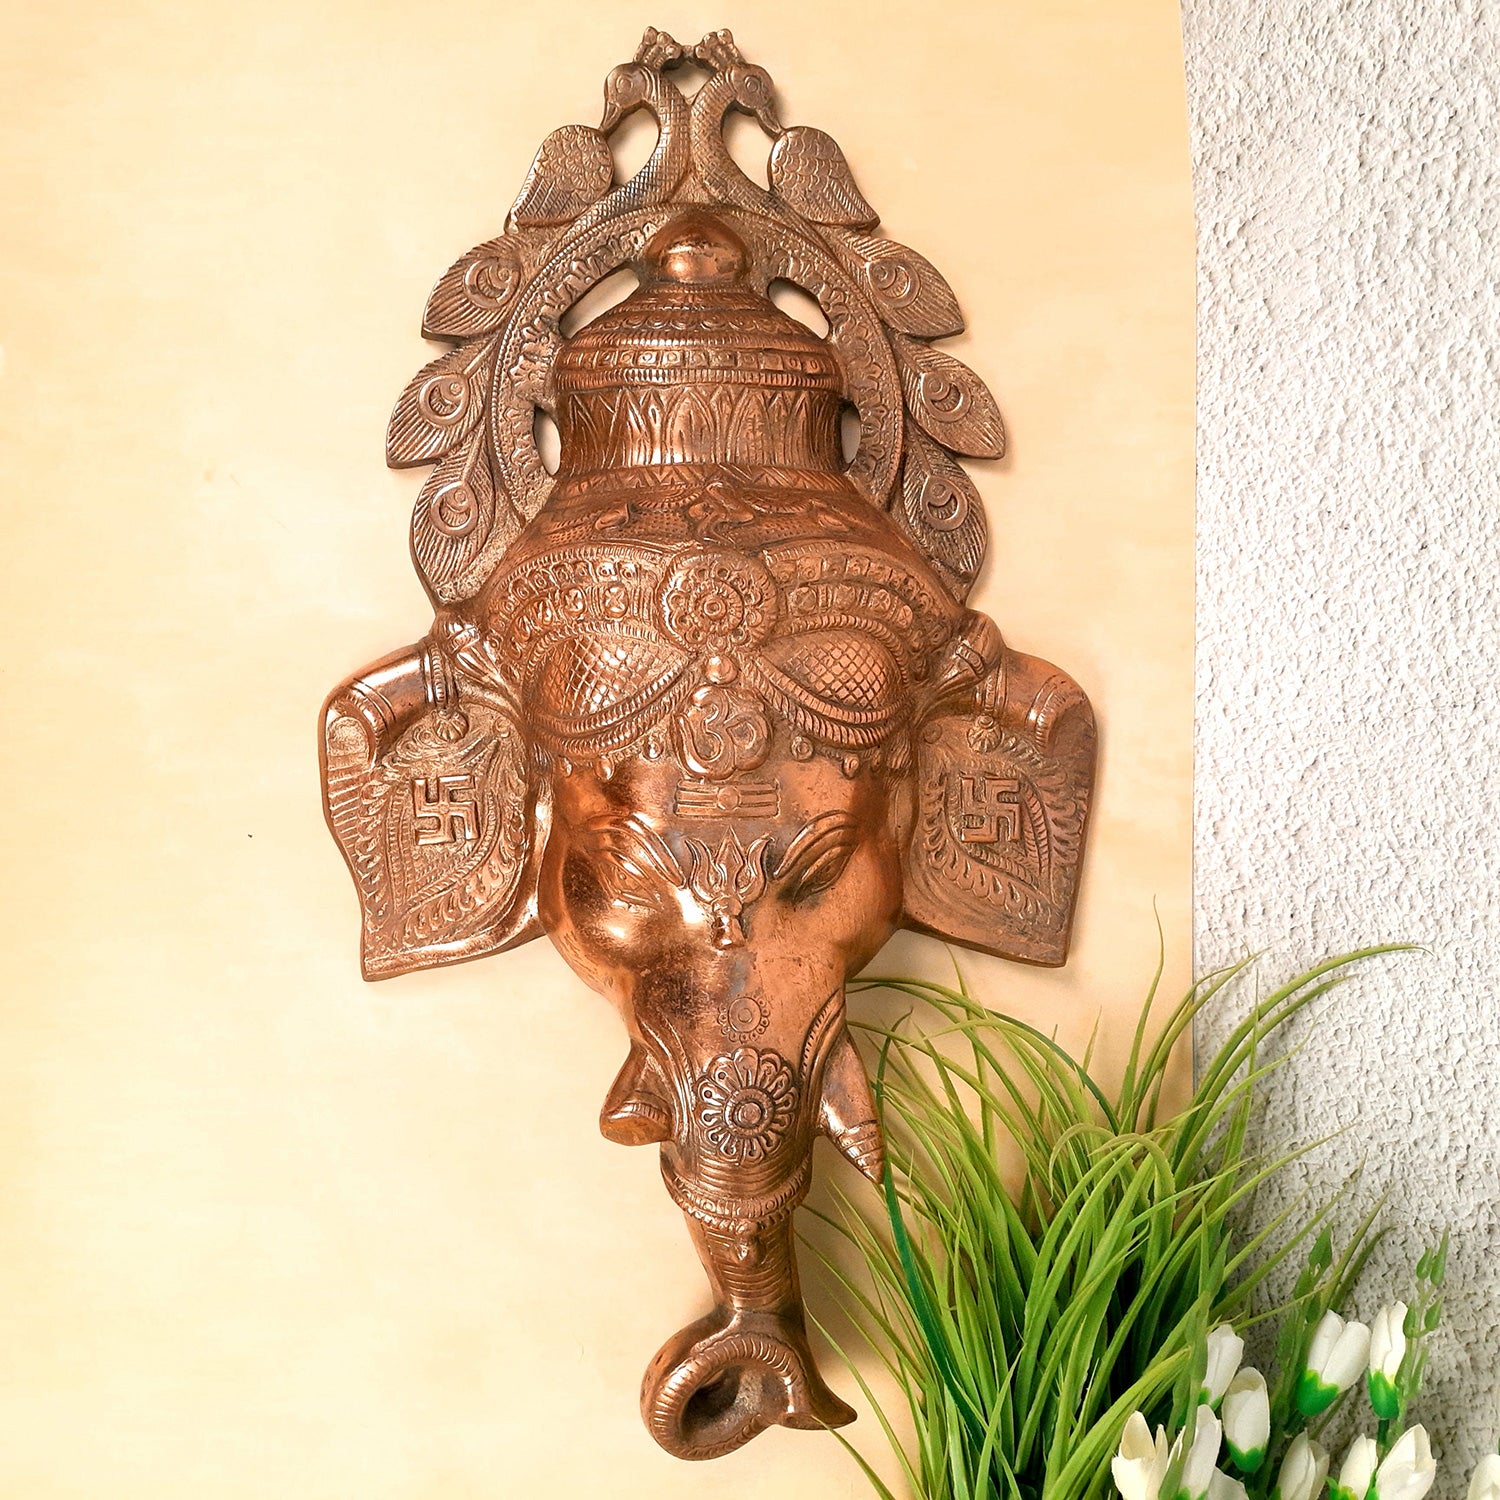 Ganesh Wall Hanging Idol | Lord Ganesha Face Wall Statue Decor |Religoius & Spiritual Wall Art - For Puja, Home & Entrance Living Room & Gift - 25 Inch - apkamart